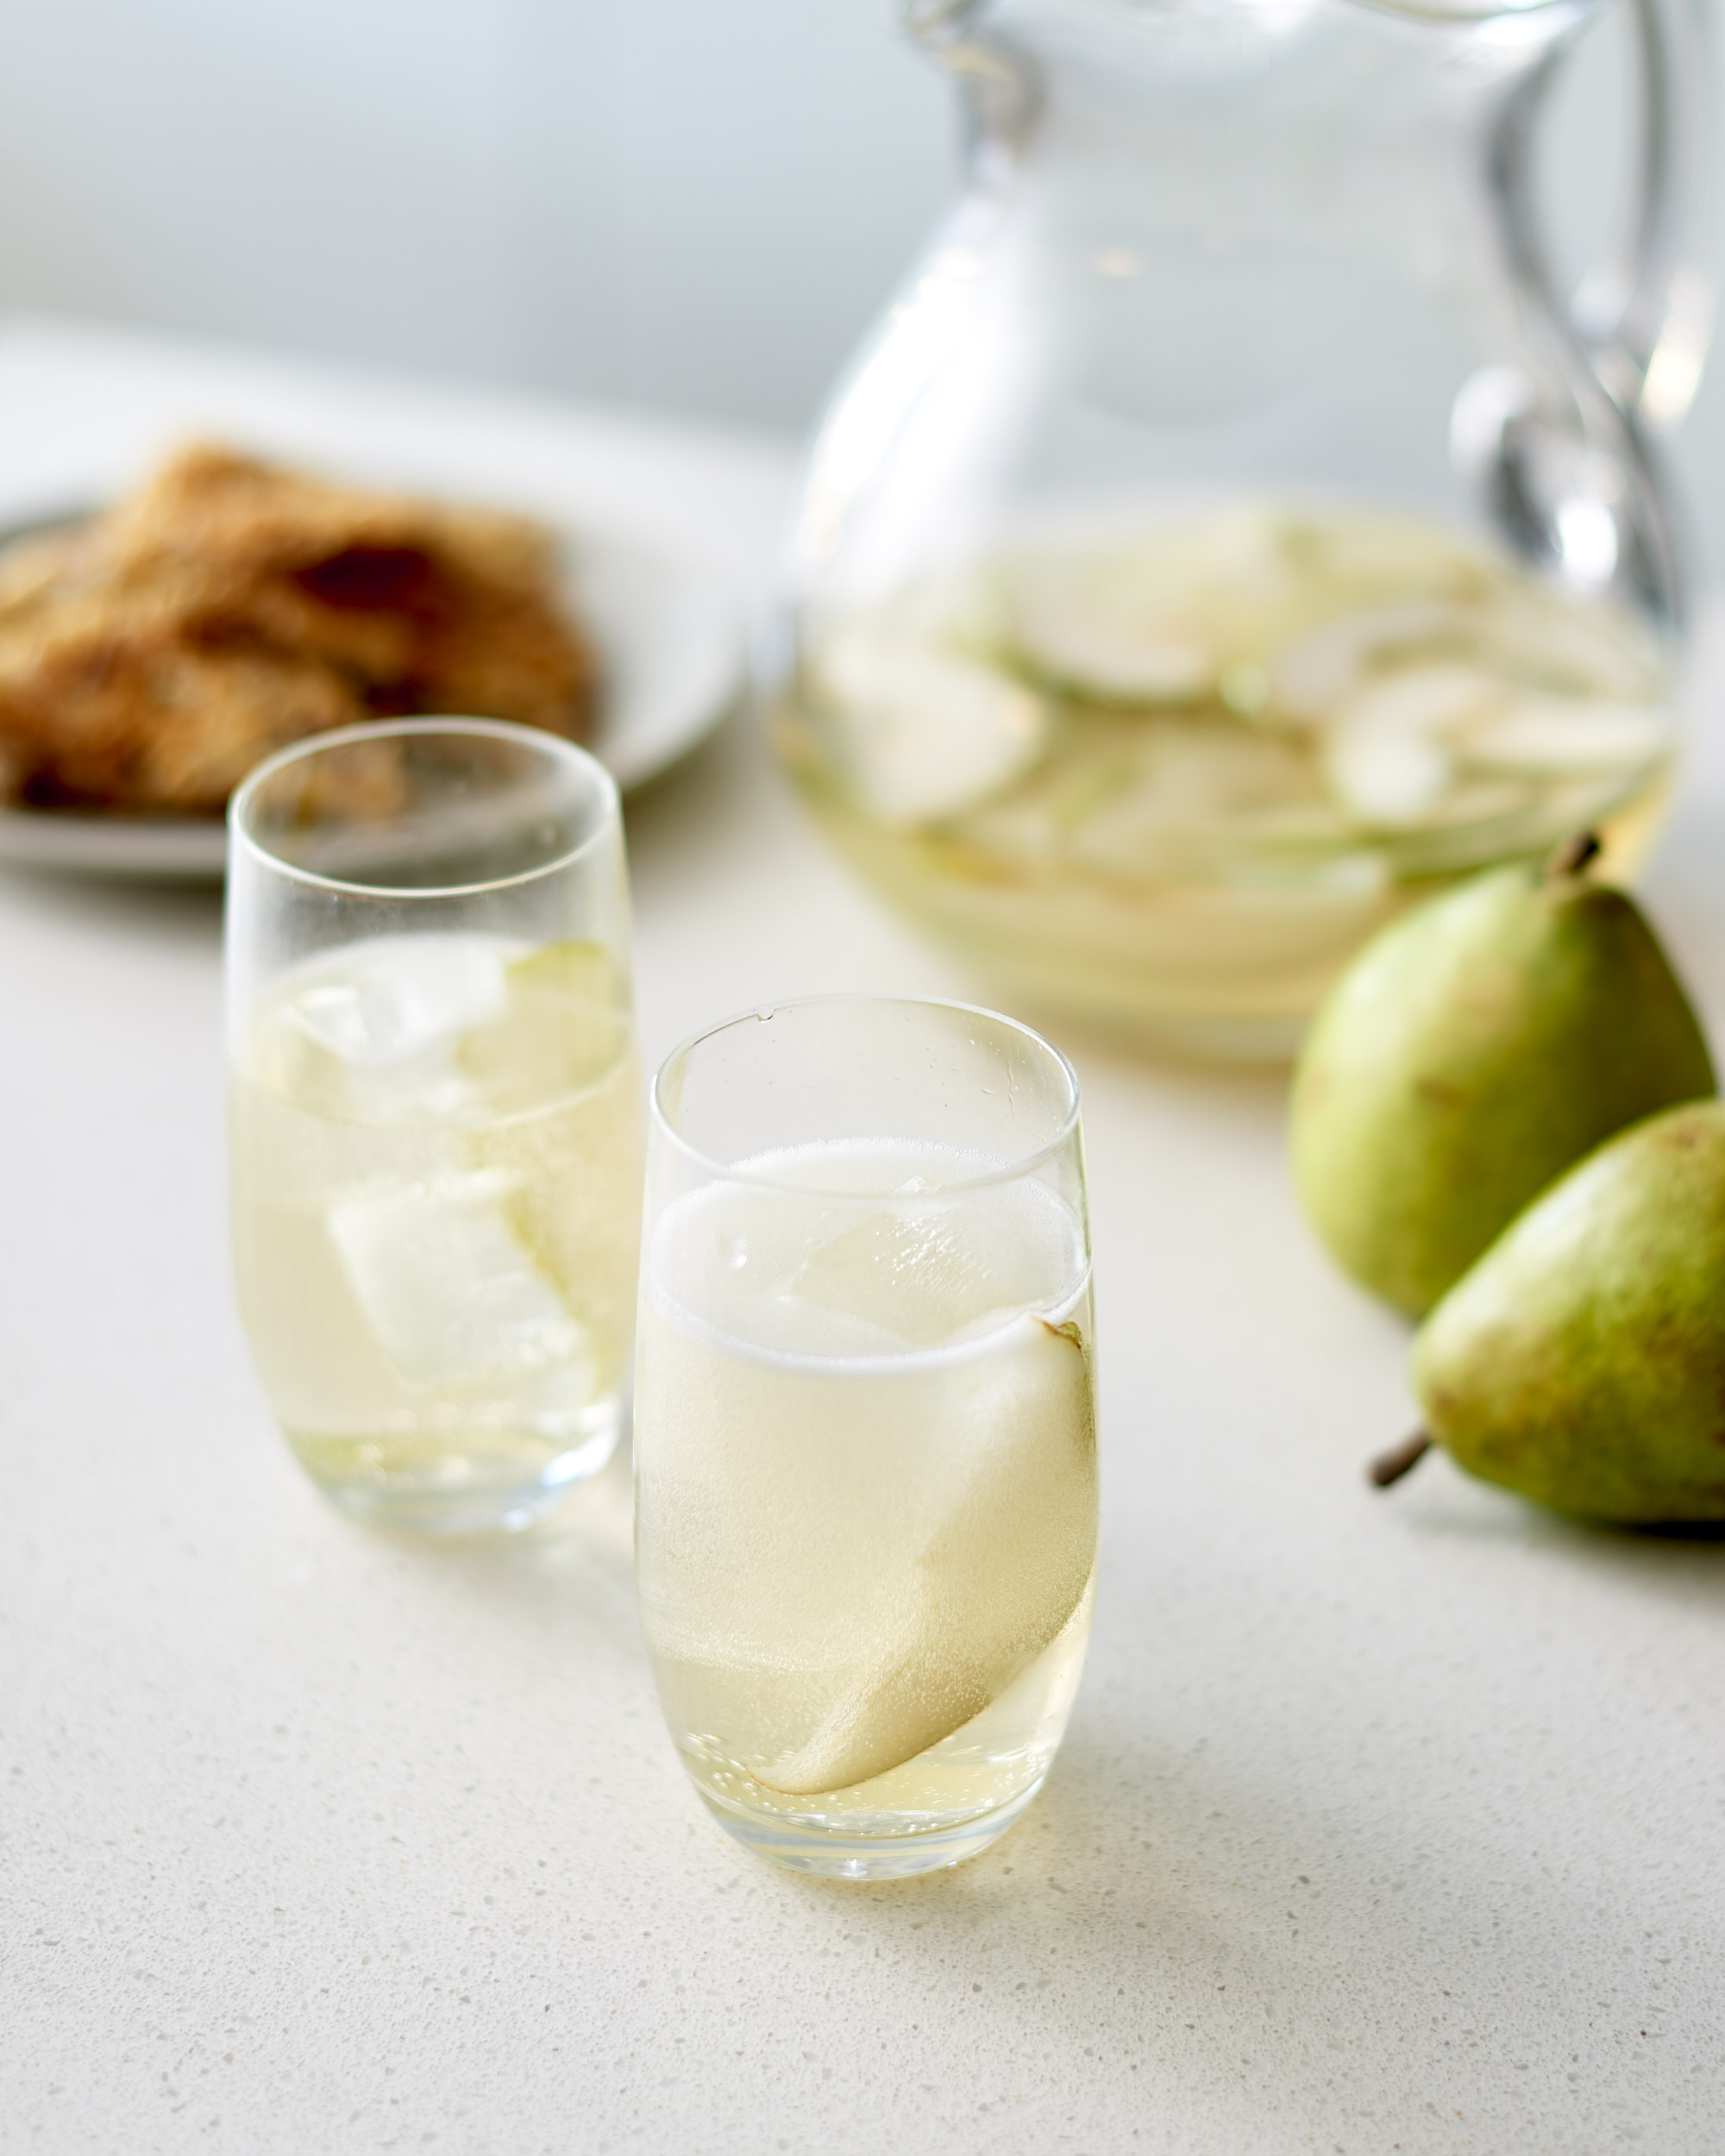 Spiced Pear Serves Sparkling Wines Alongside Brand Education